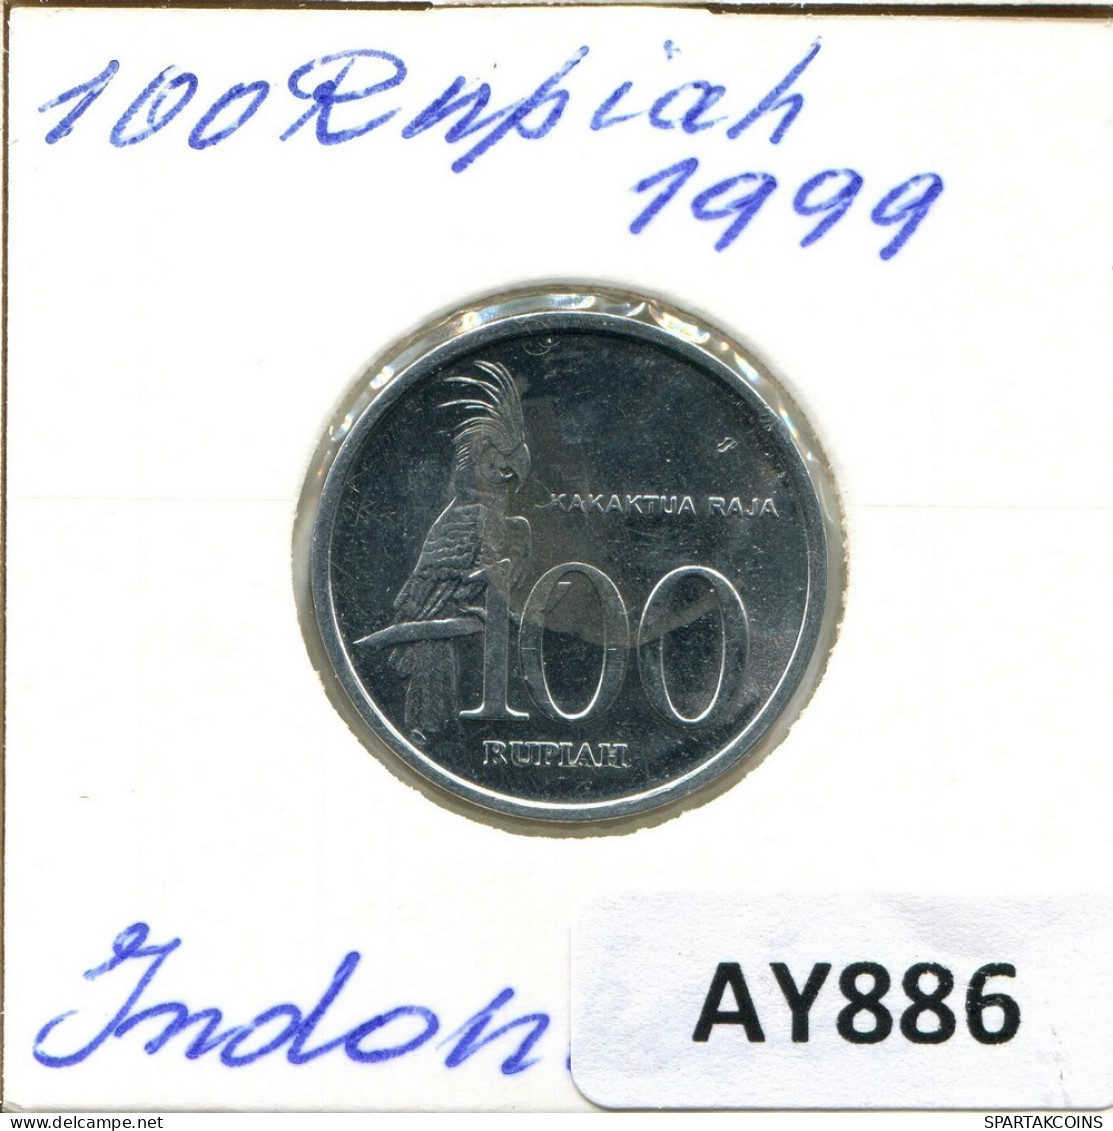 100 RUPIAH 1999 INDONESIA Coin #AY886.U.A - Indonesien